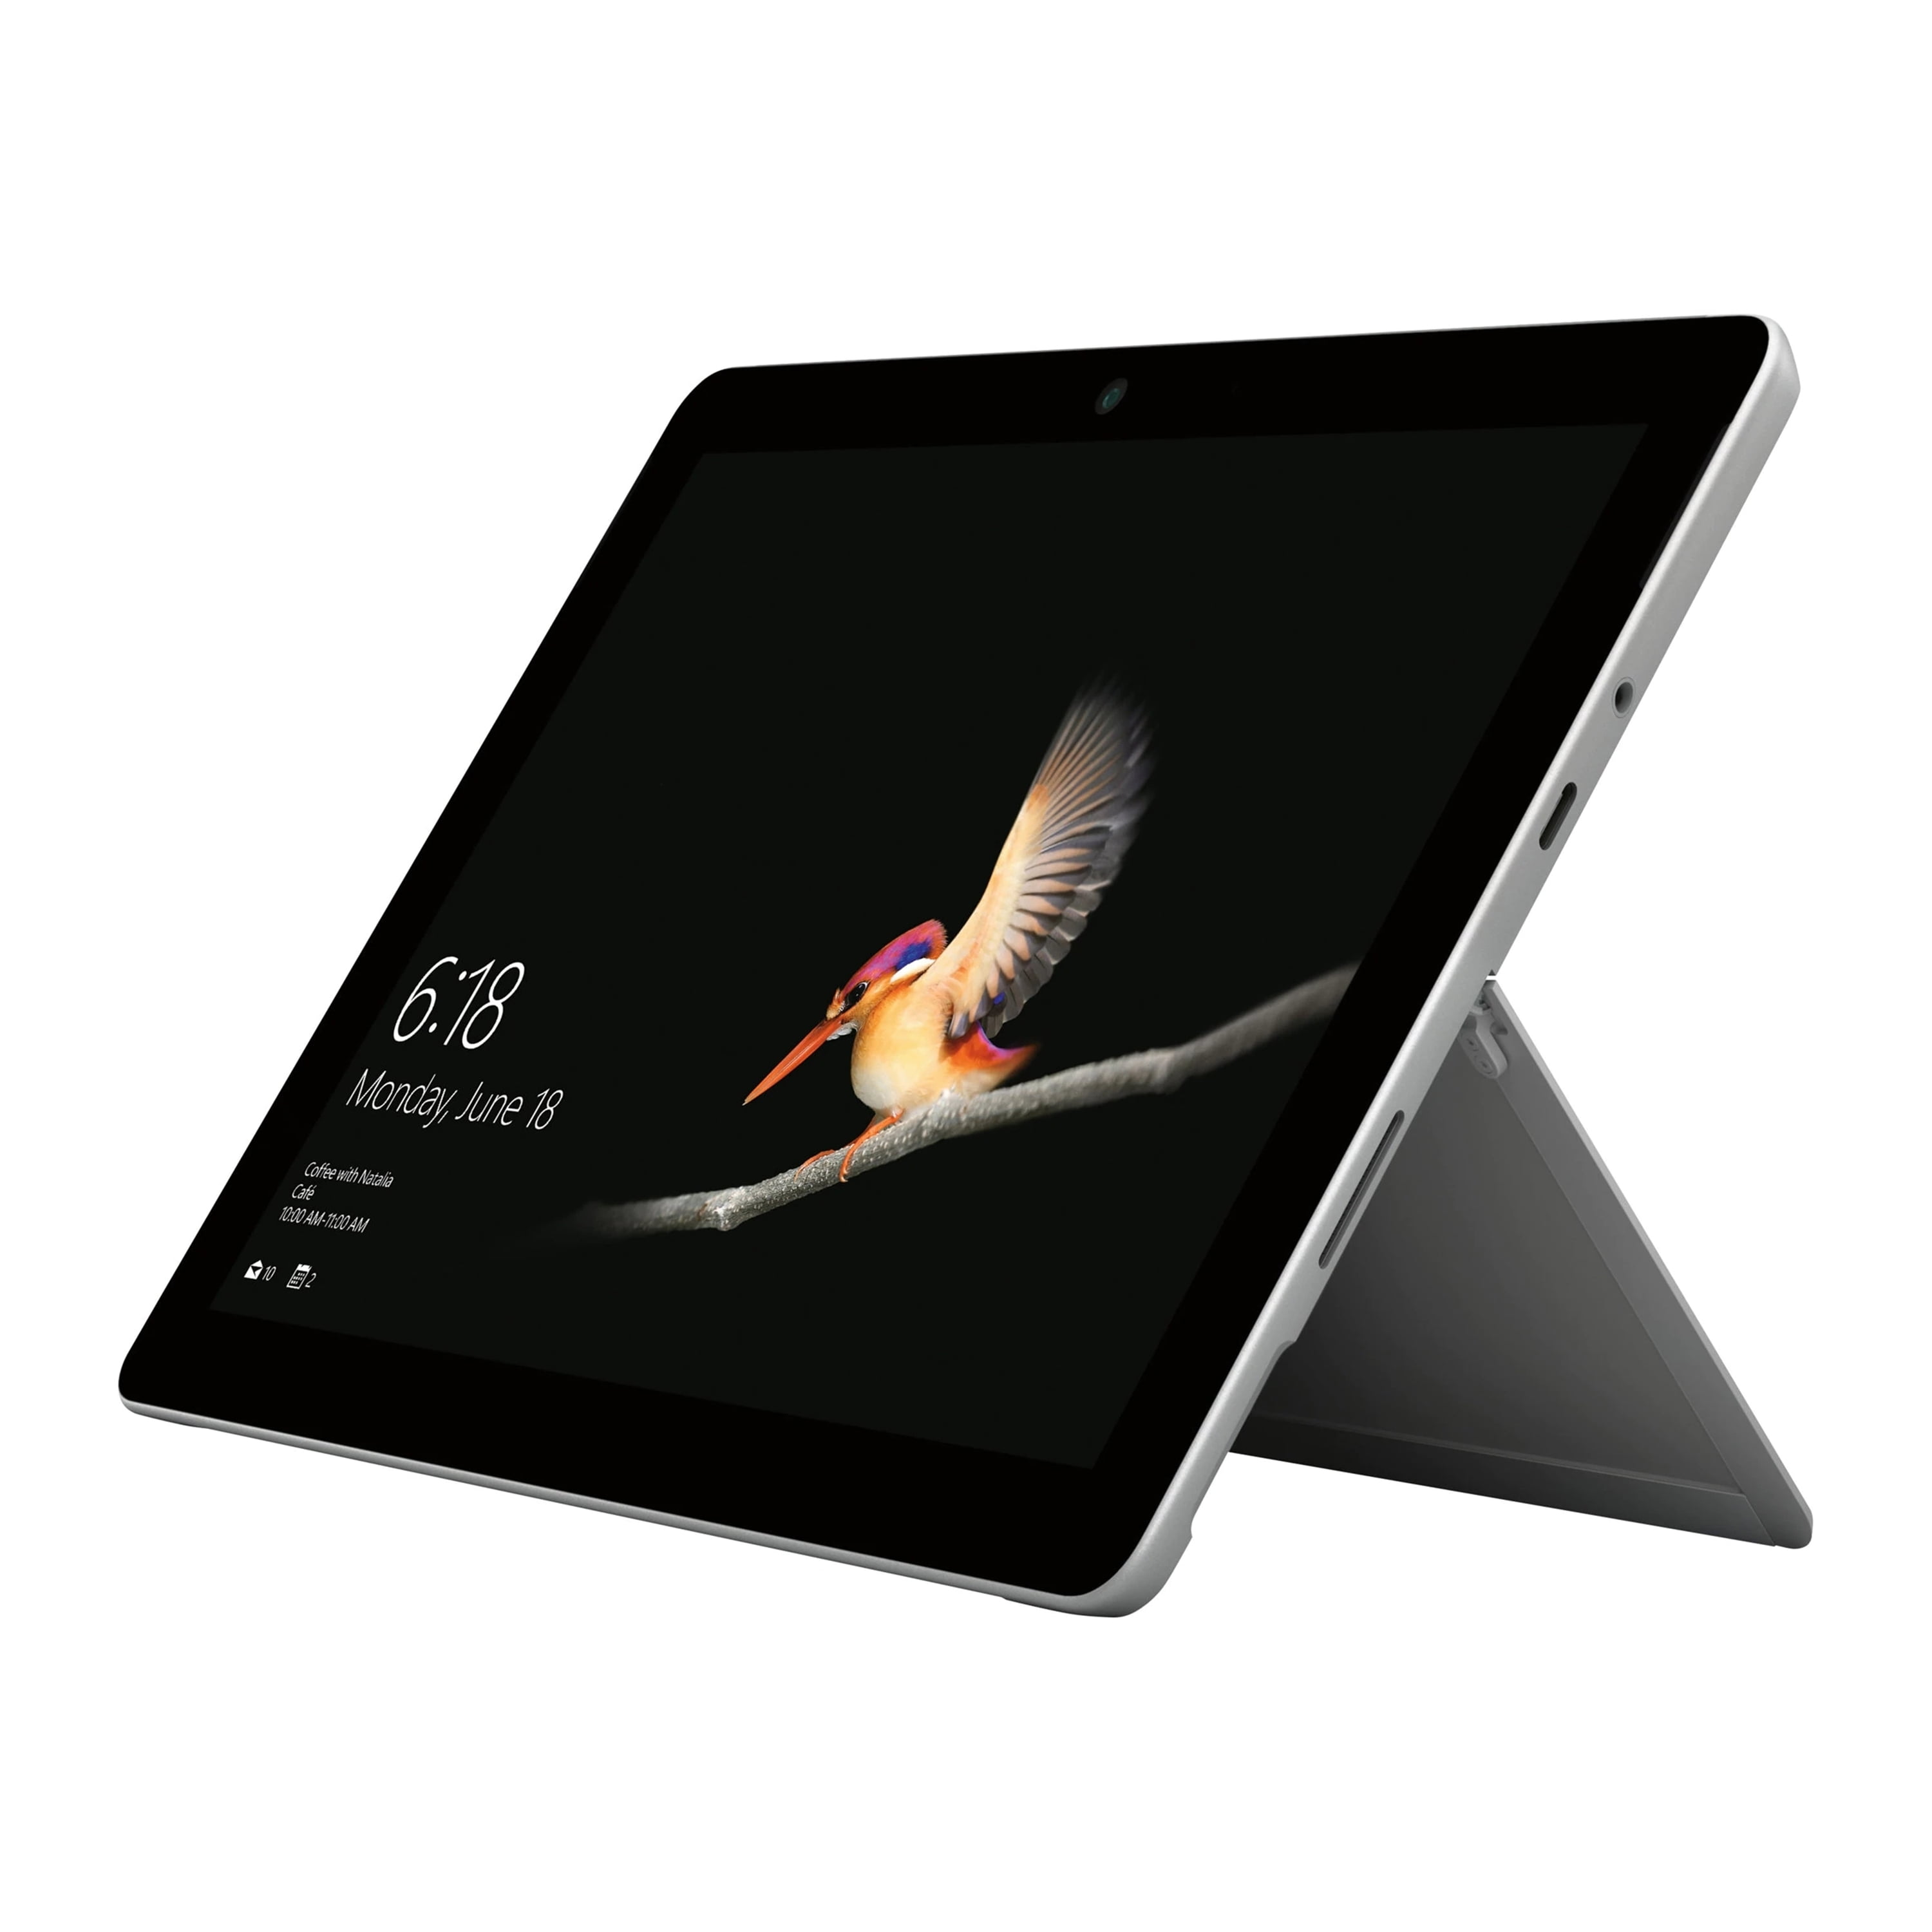 Microsoft Surface Pro 2 - 128GB, Haswell i5 Processor, 10.6